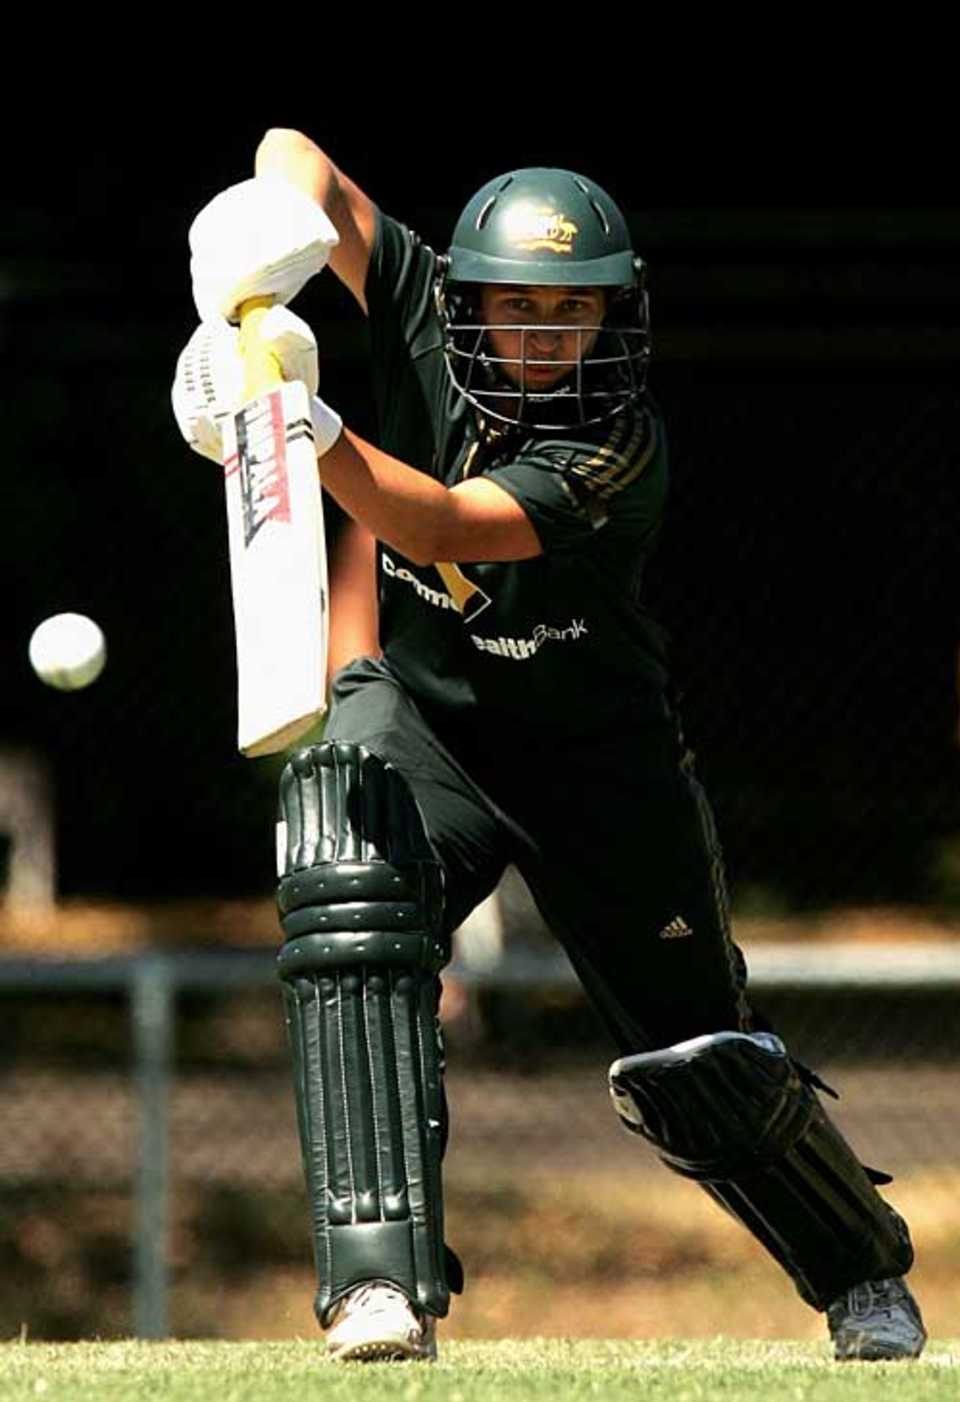 Shelley Nitschke hit 27 to put Australia on course for victory, Australia women v New Zealand women, 1st ODI, Darwin, July 21, 2007